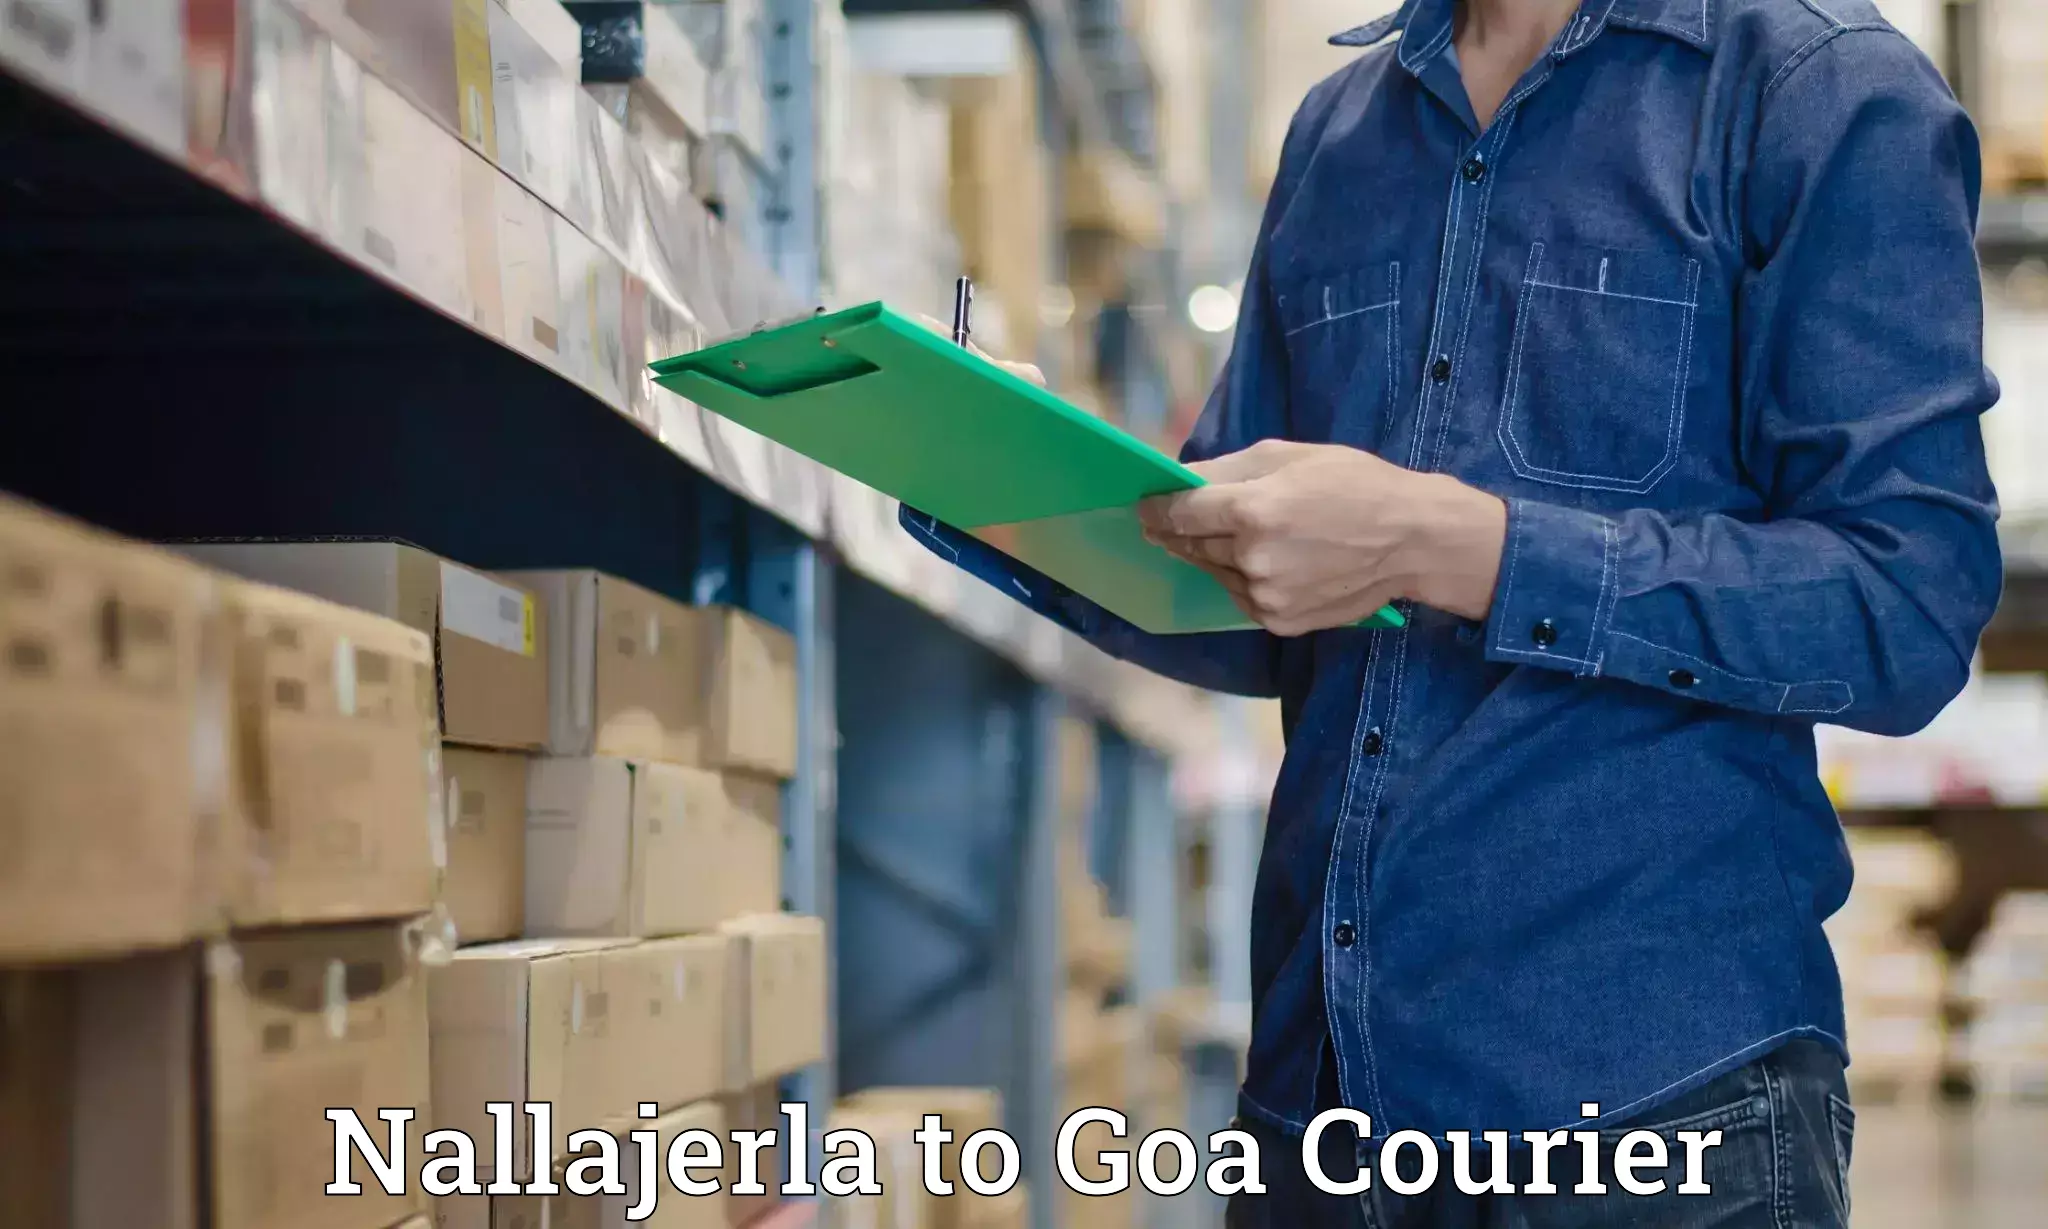 Courier service comparison Nallajerla to Panjim